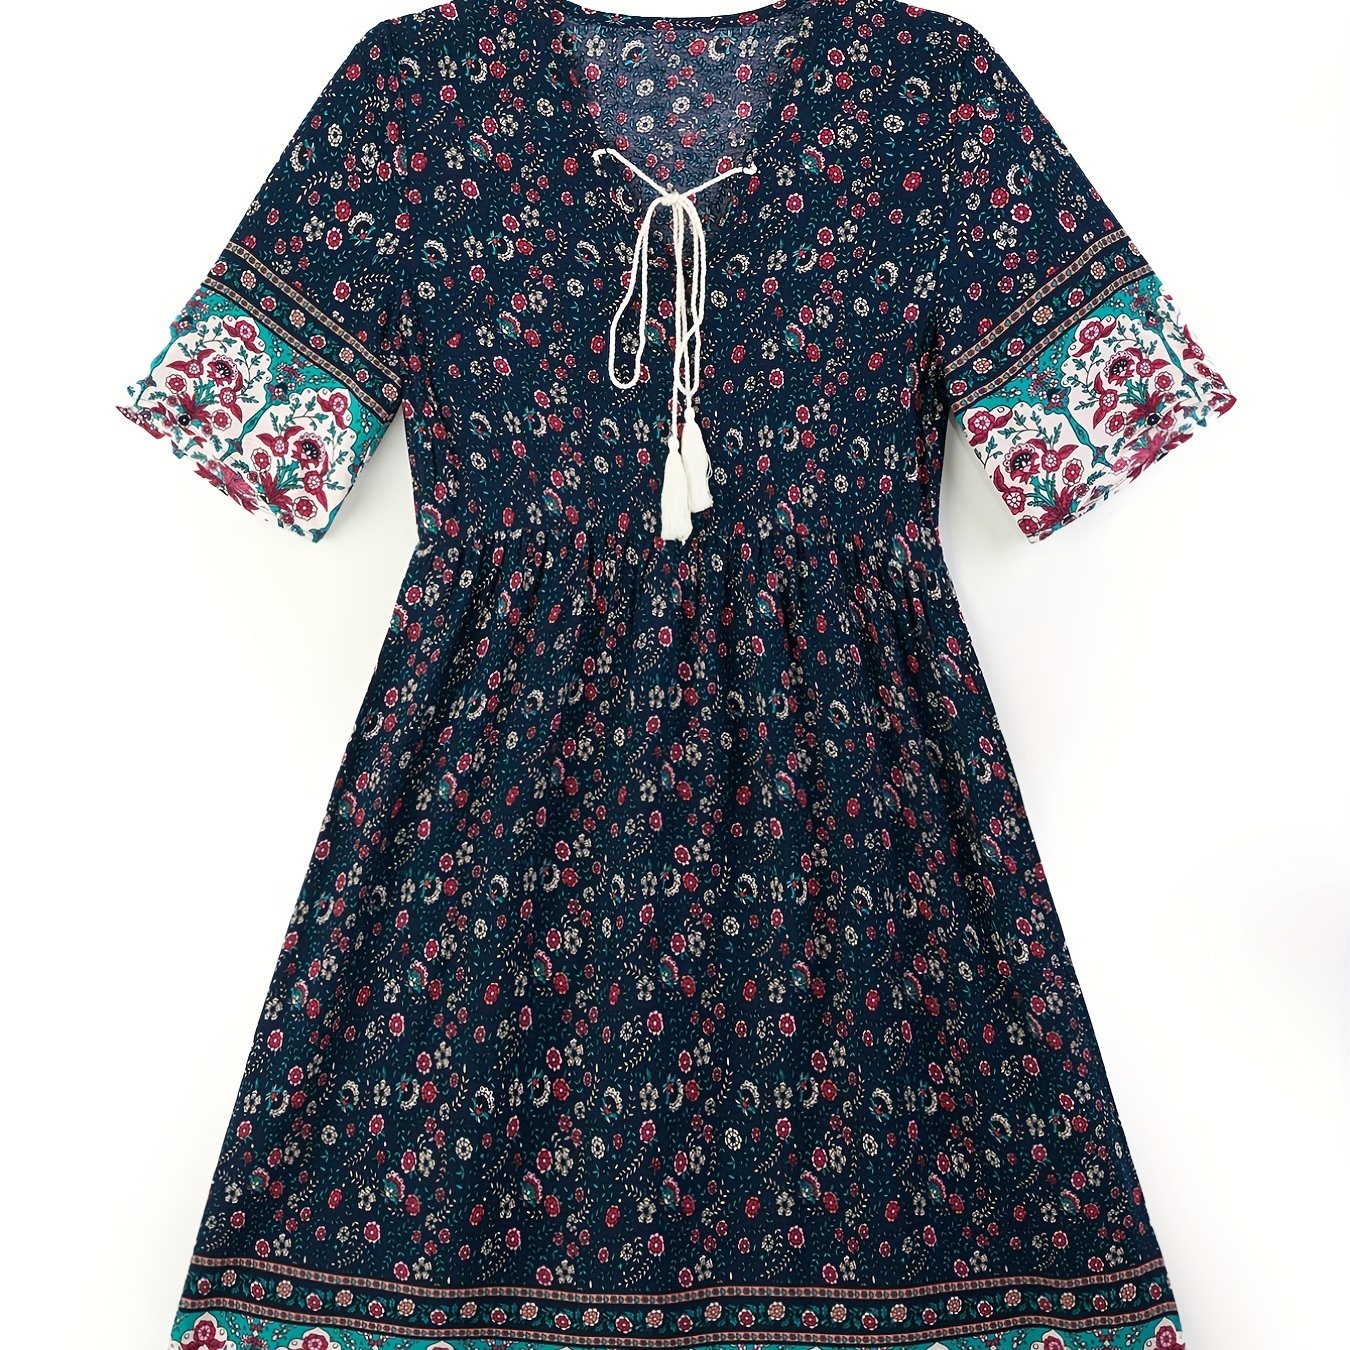 Antmvs Floral Print V Neck Dress, Casual Short Sleeve Dress For Spring & Summer, Women's Clothing